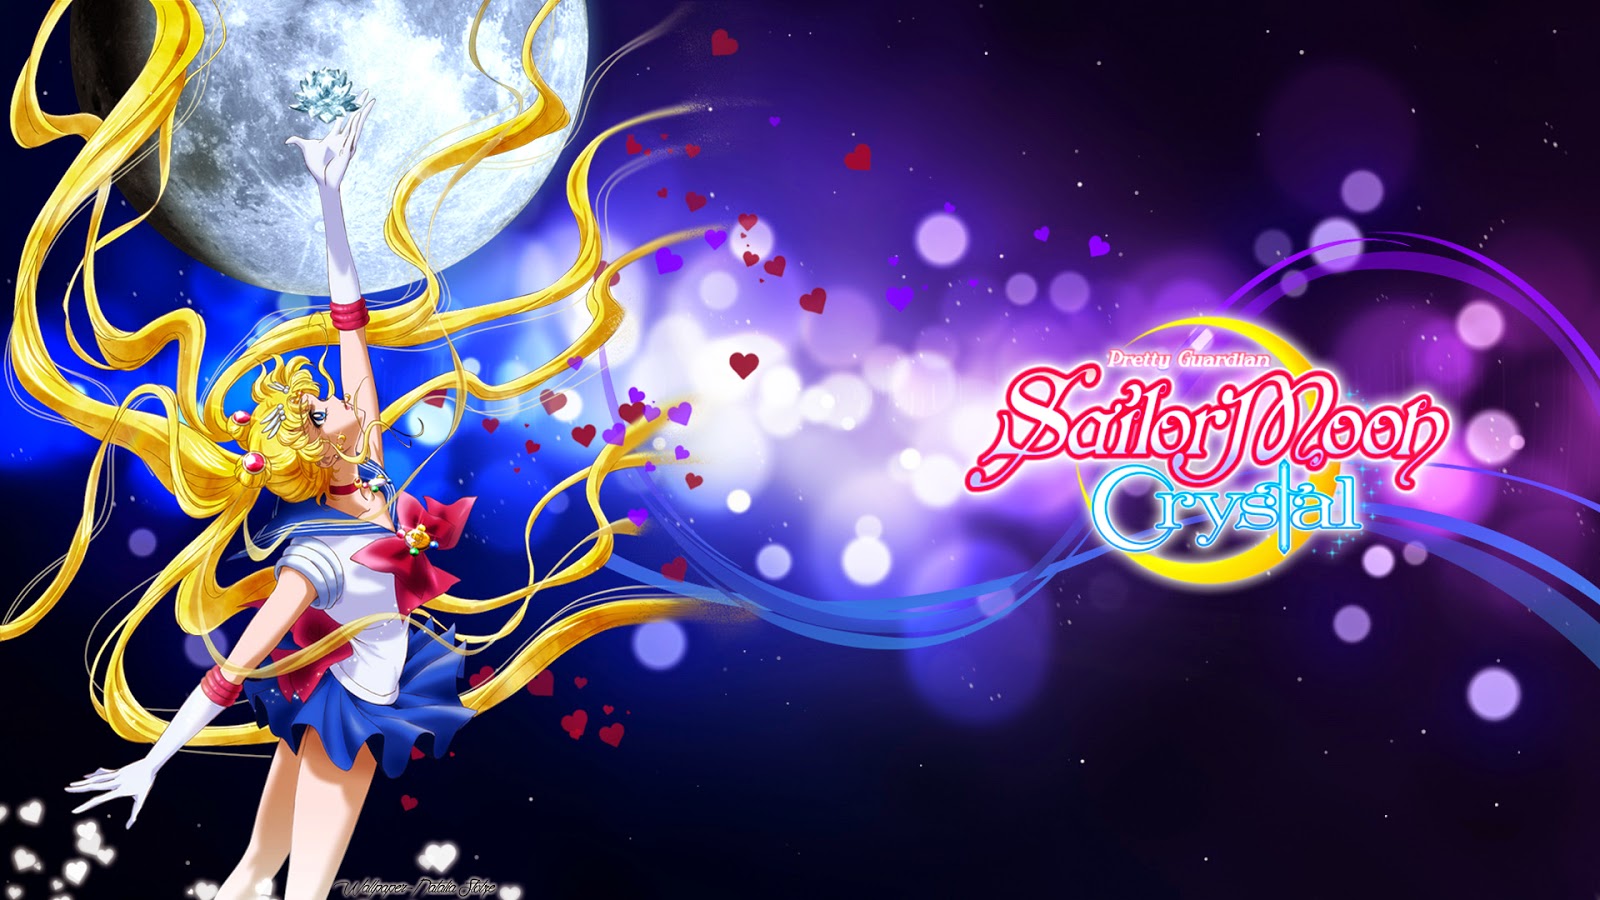 [41+] Sailor Moon Crystal Hd Wallpaper | Wallpapersafari.com